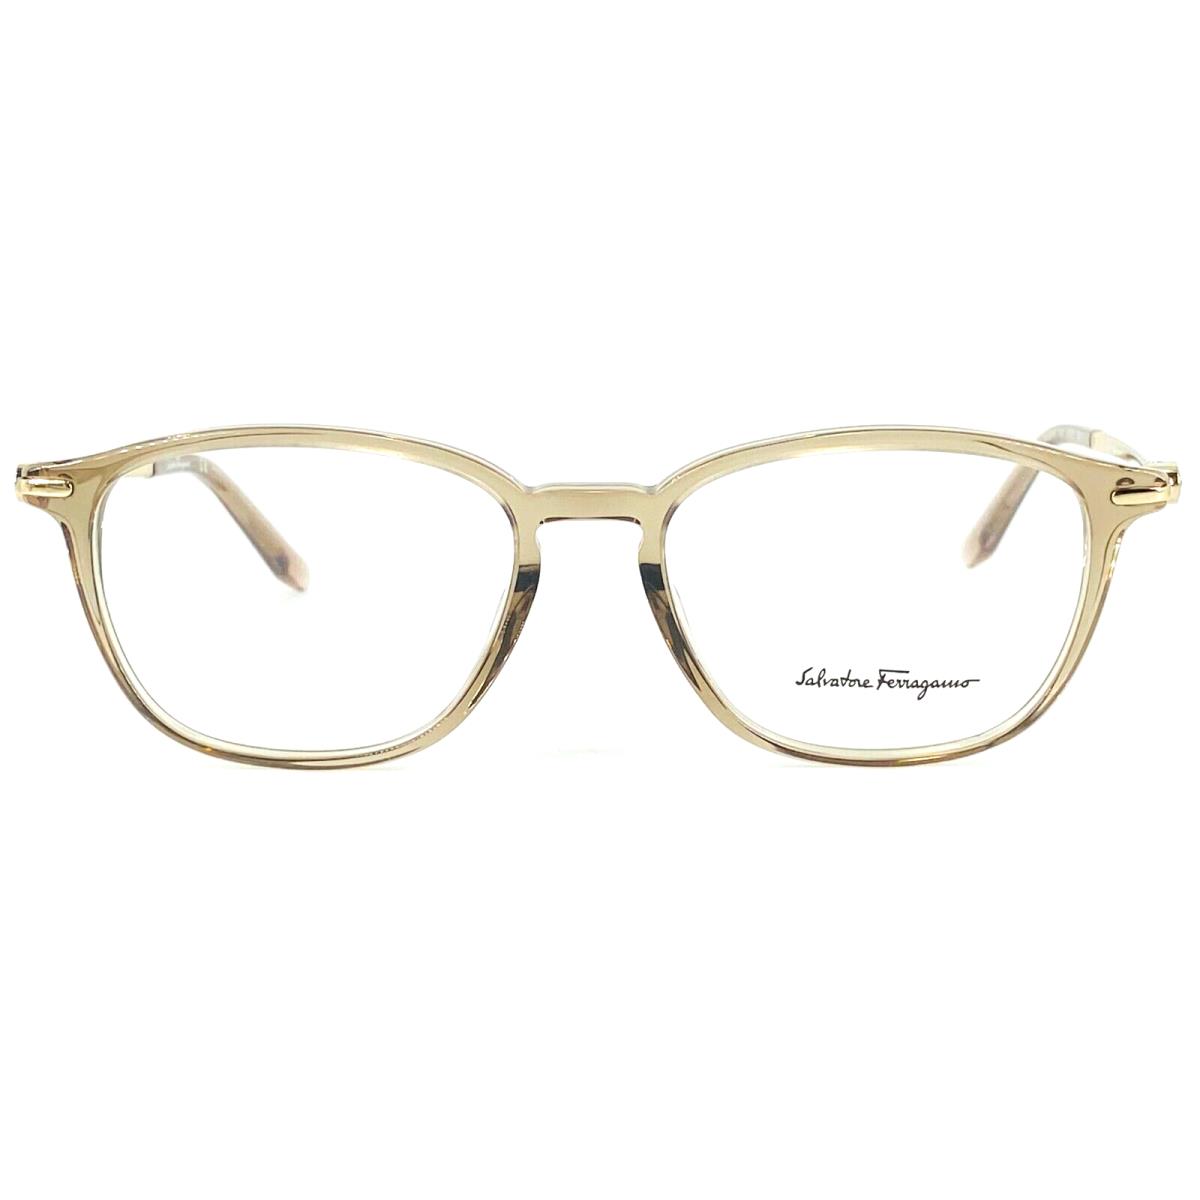 Salvatore Ferragamo eyeglasses  - 043 Crystal Beige , Beige Frame 0